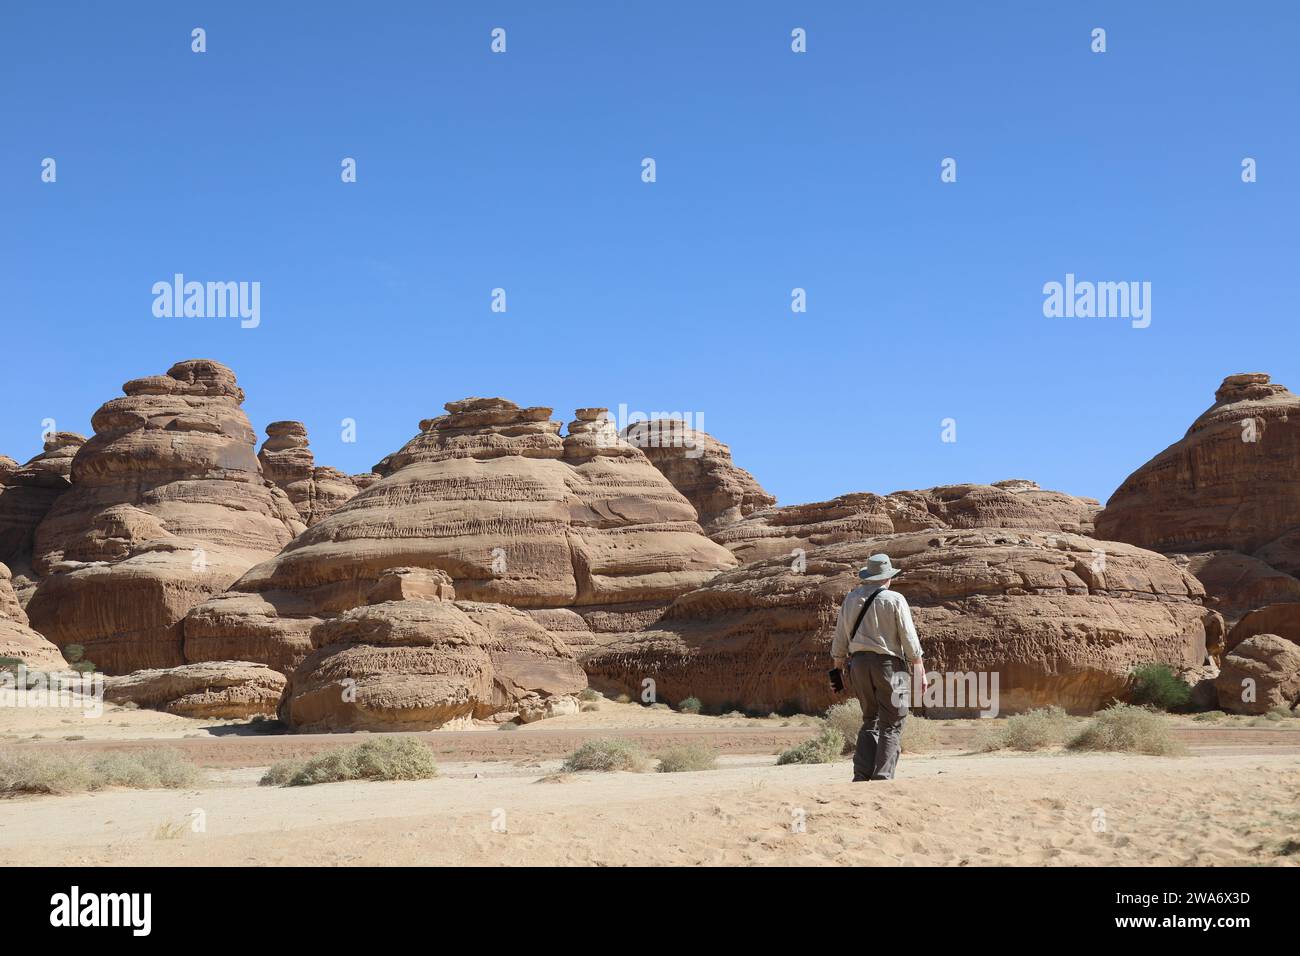 Geologist exploring rock formations in the Arabian Desert Stock Photo